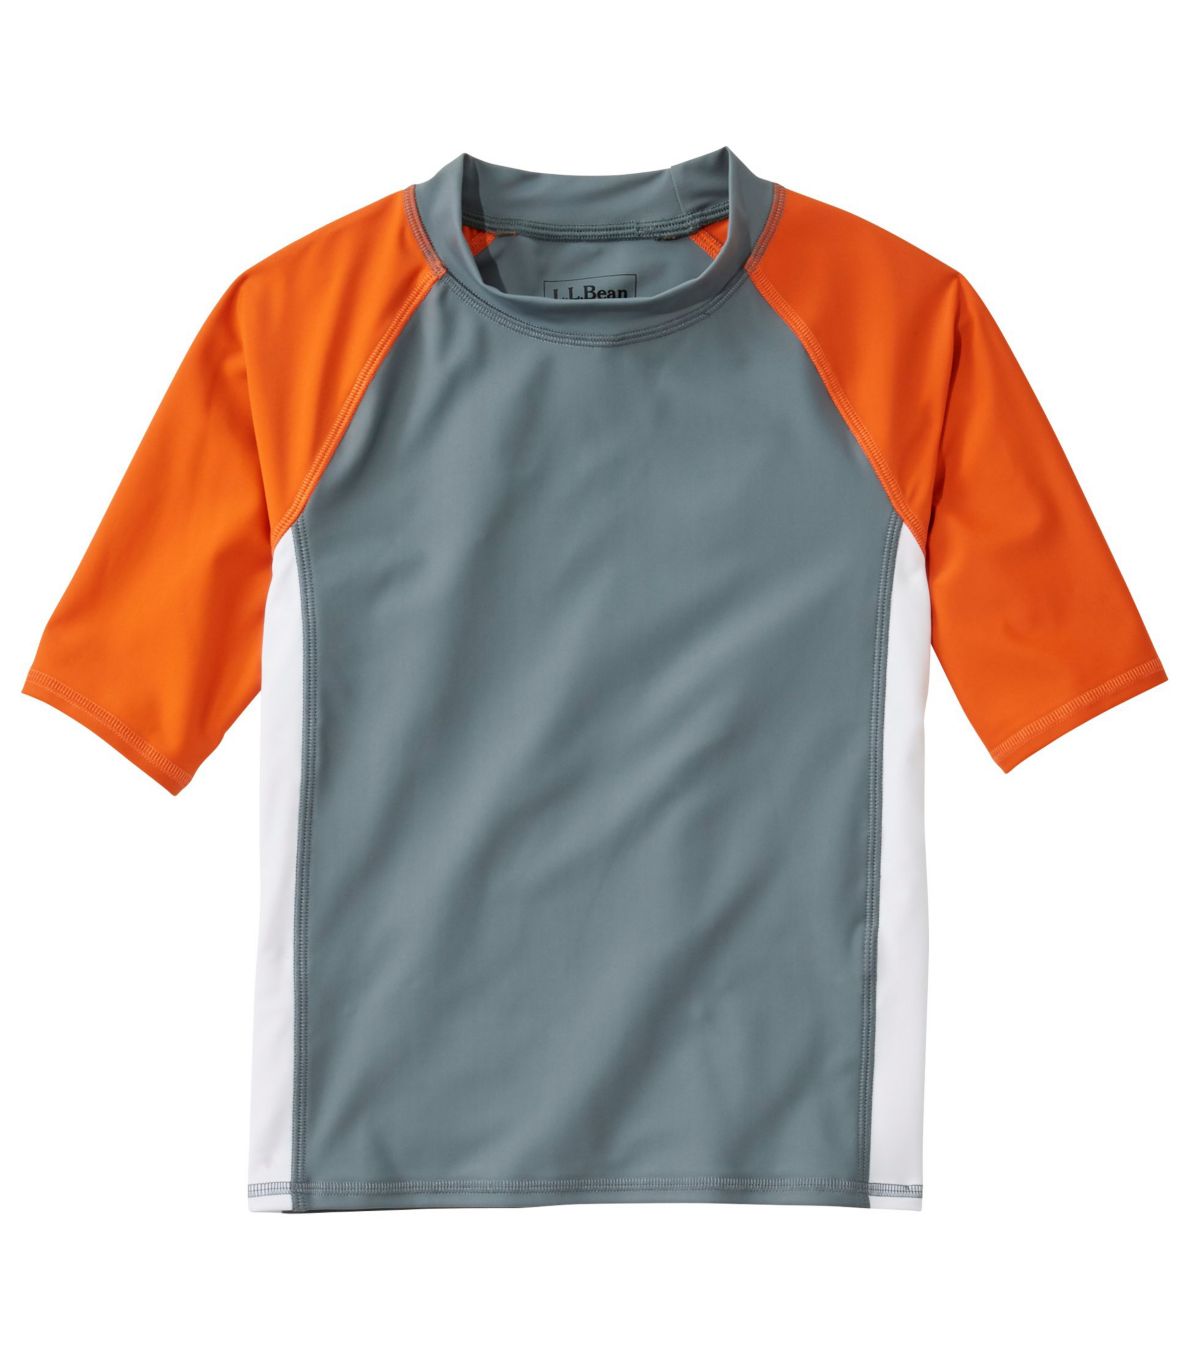 Kids' Sun-and-Surf Shirt, Short-Sleeve Colorblock